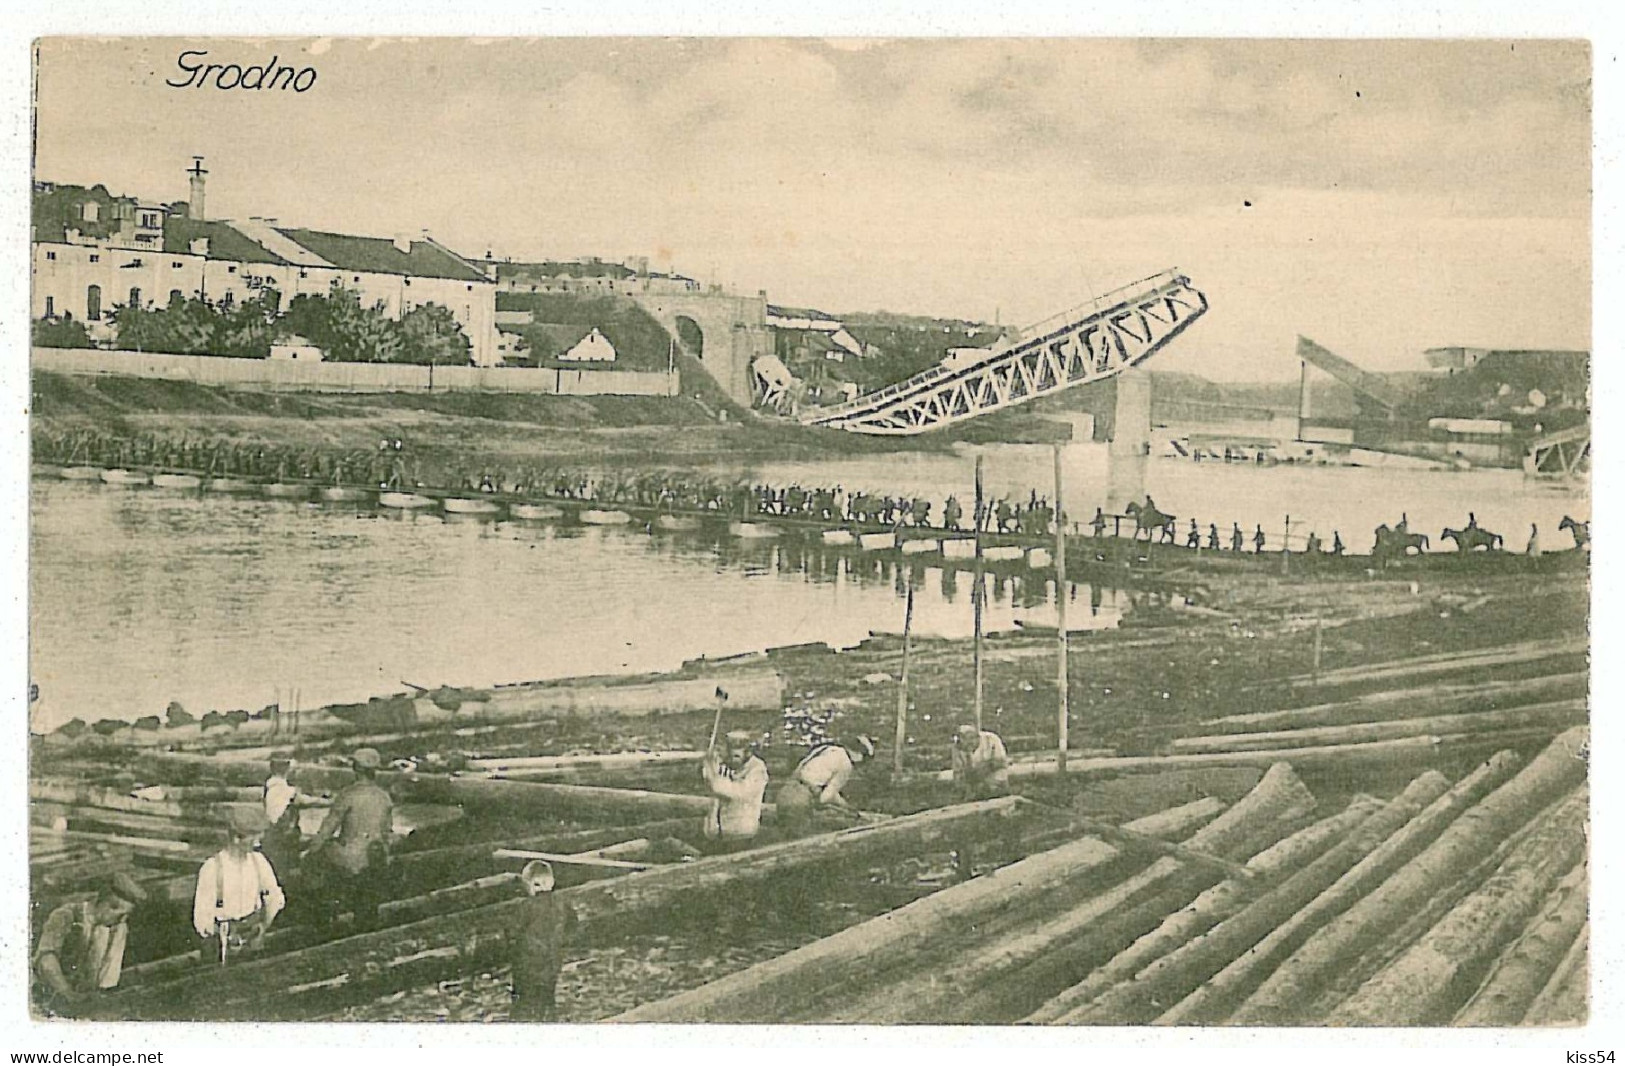 BL 12 - 6964 GRODNO, Belarus, Bridge Distroied - Old Postcard - Unused - Belarus